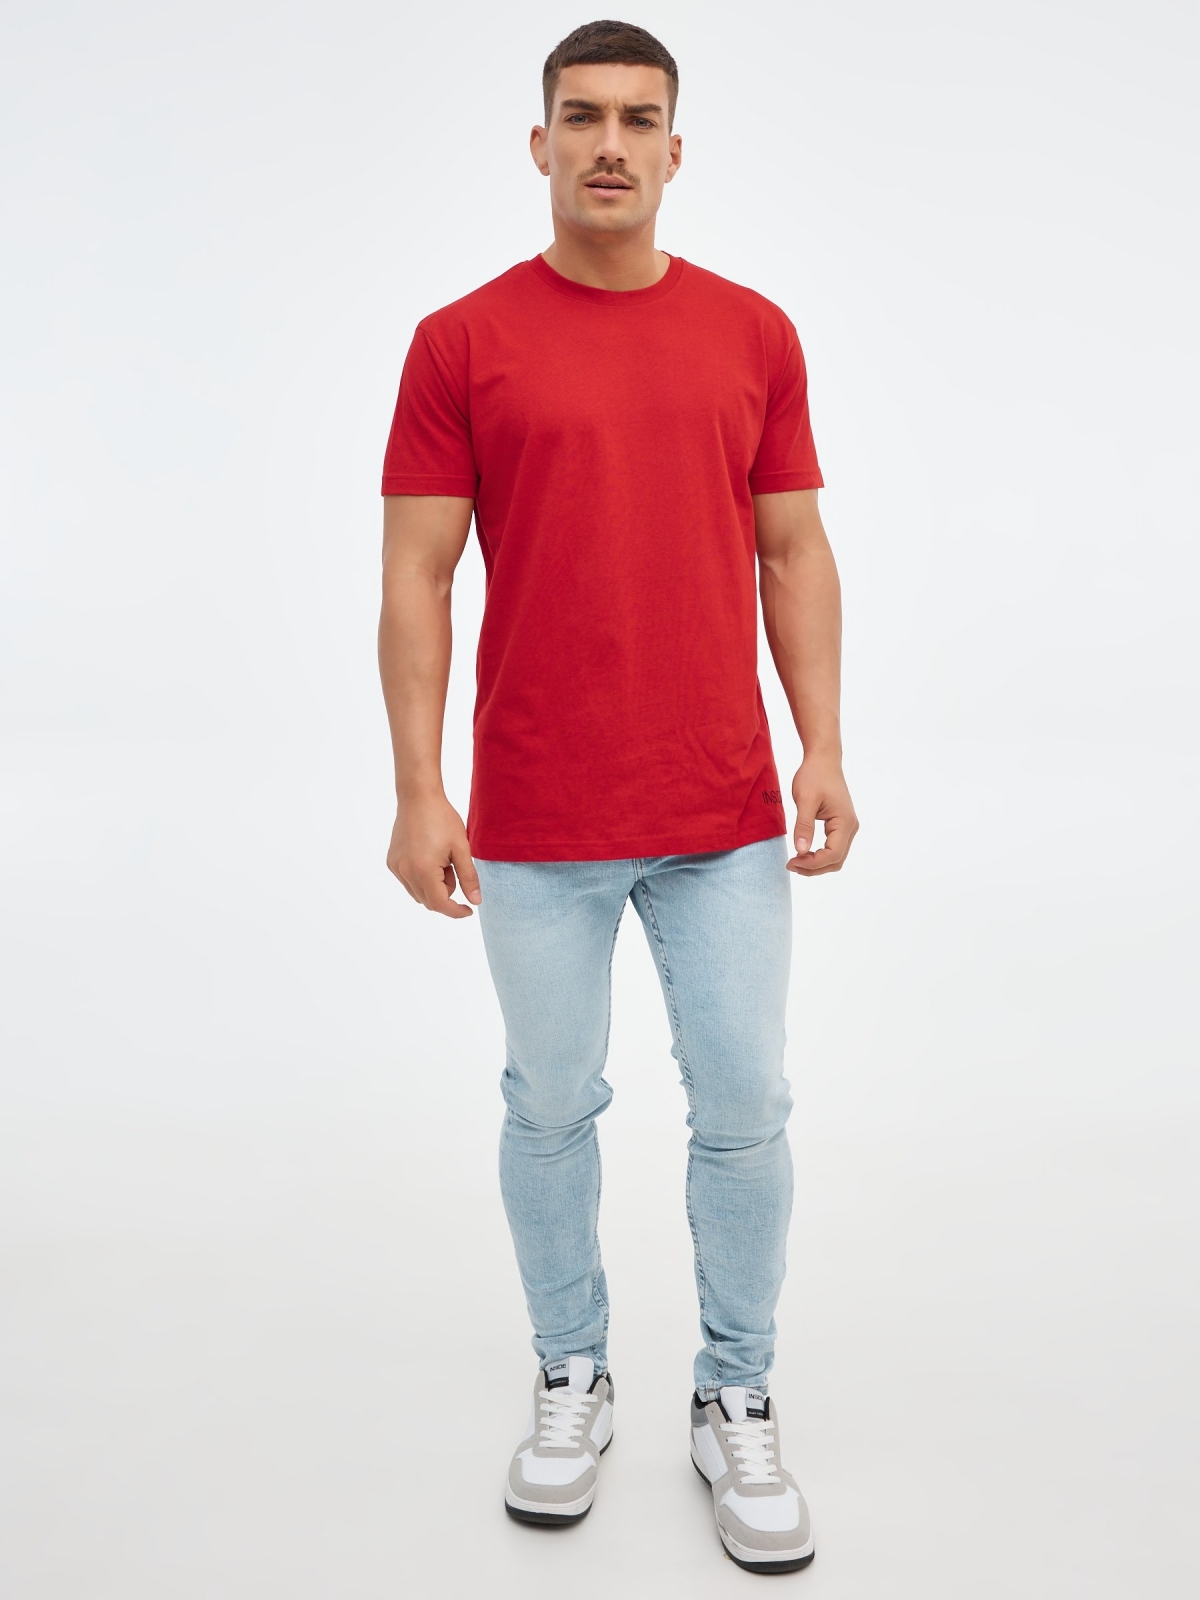 Camiseta básica manga corta rojo vista general frontal